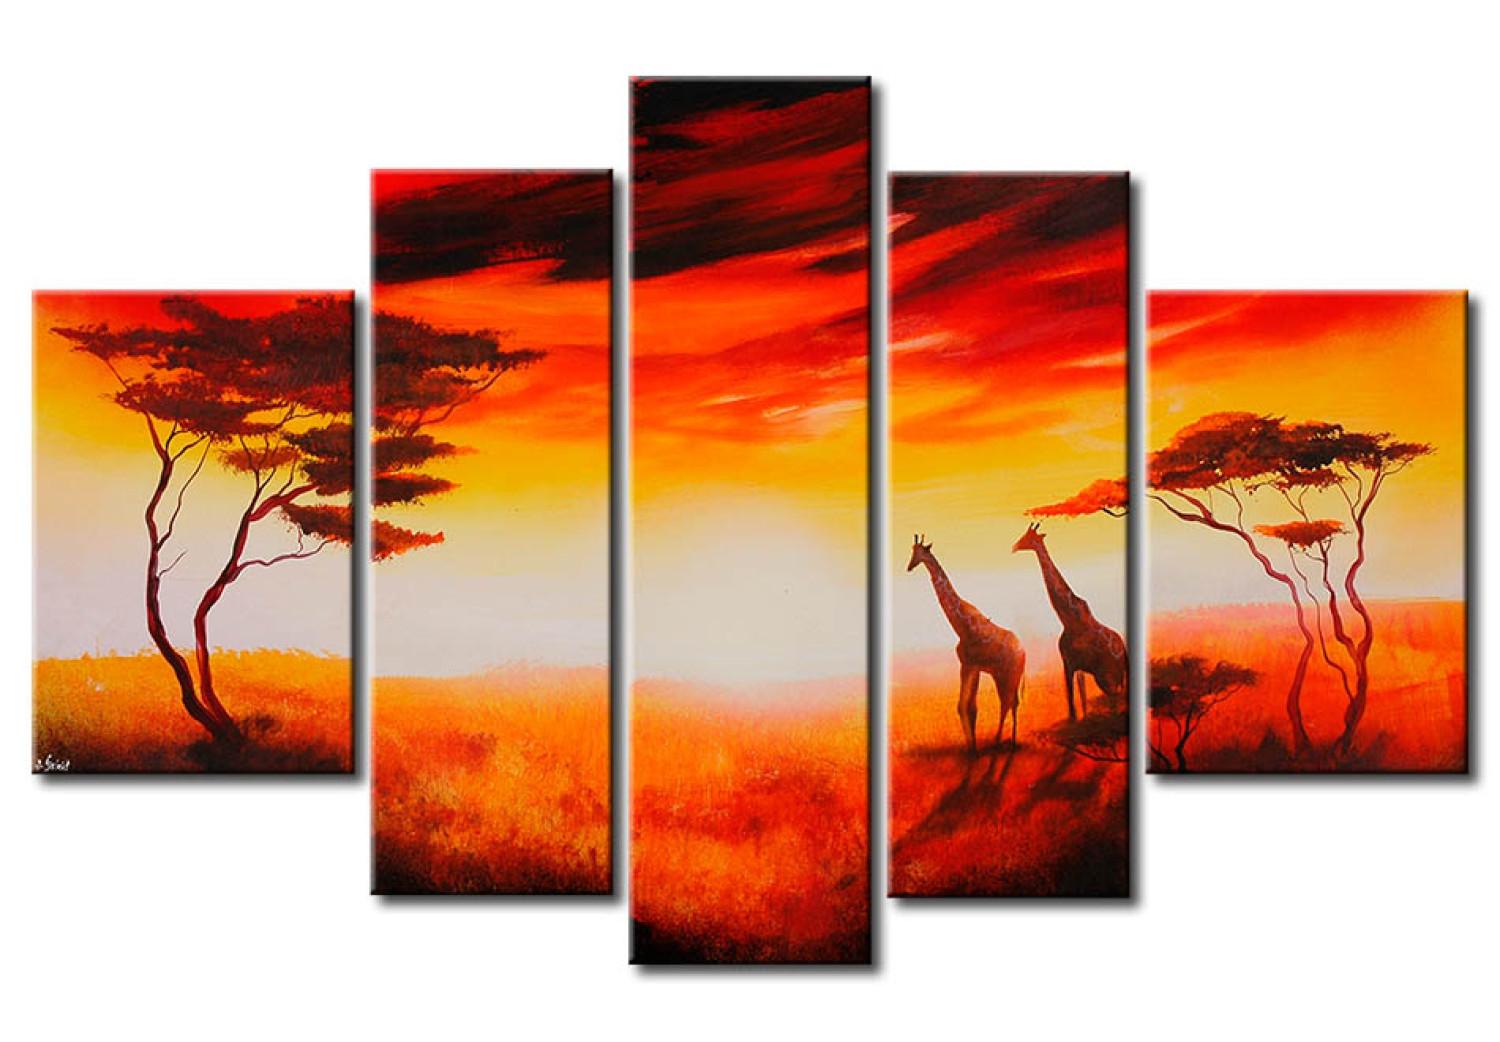 Canvas Couple of giraffes